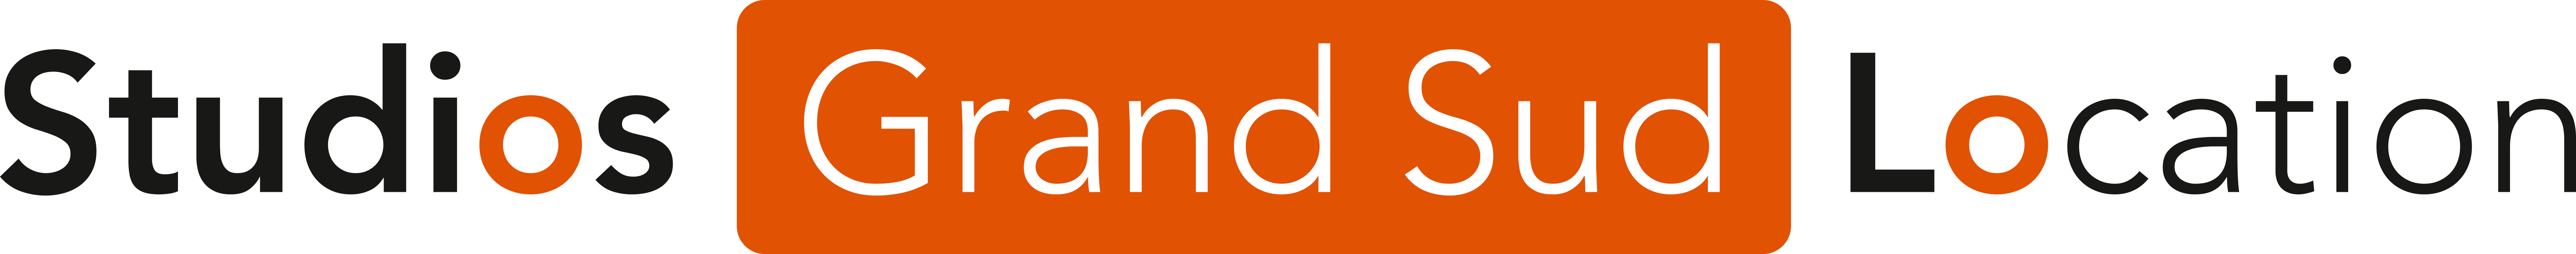 Studios Grand Sud logo